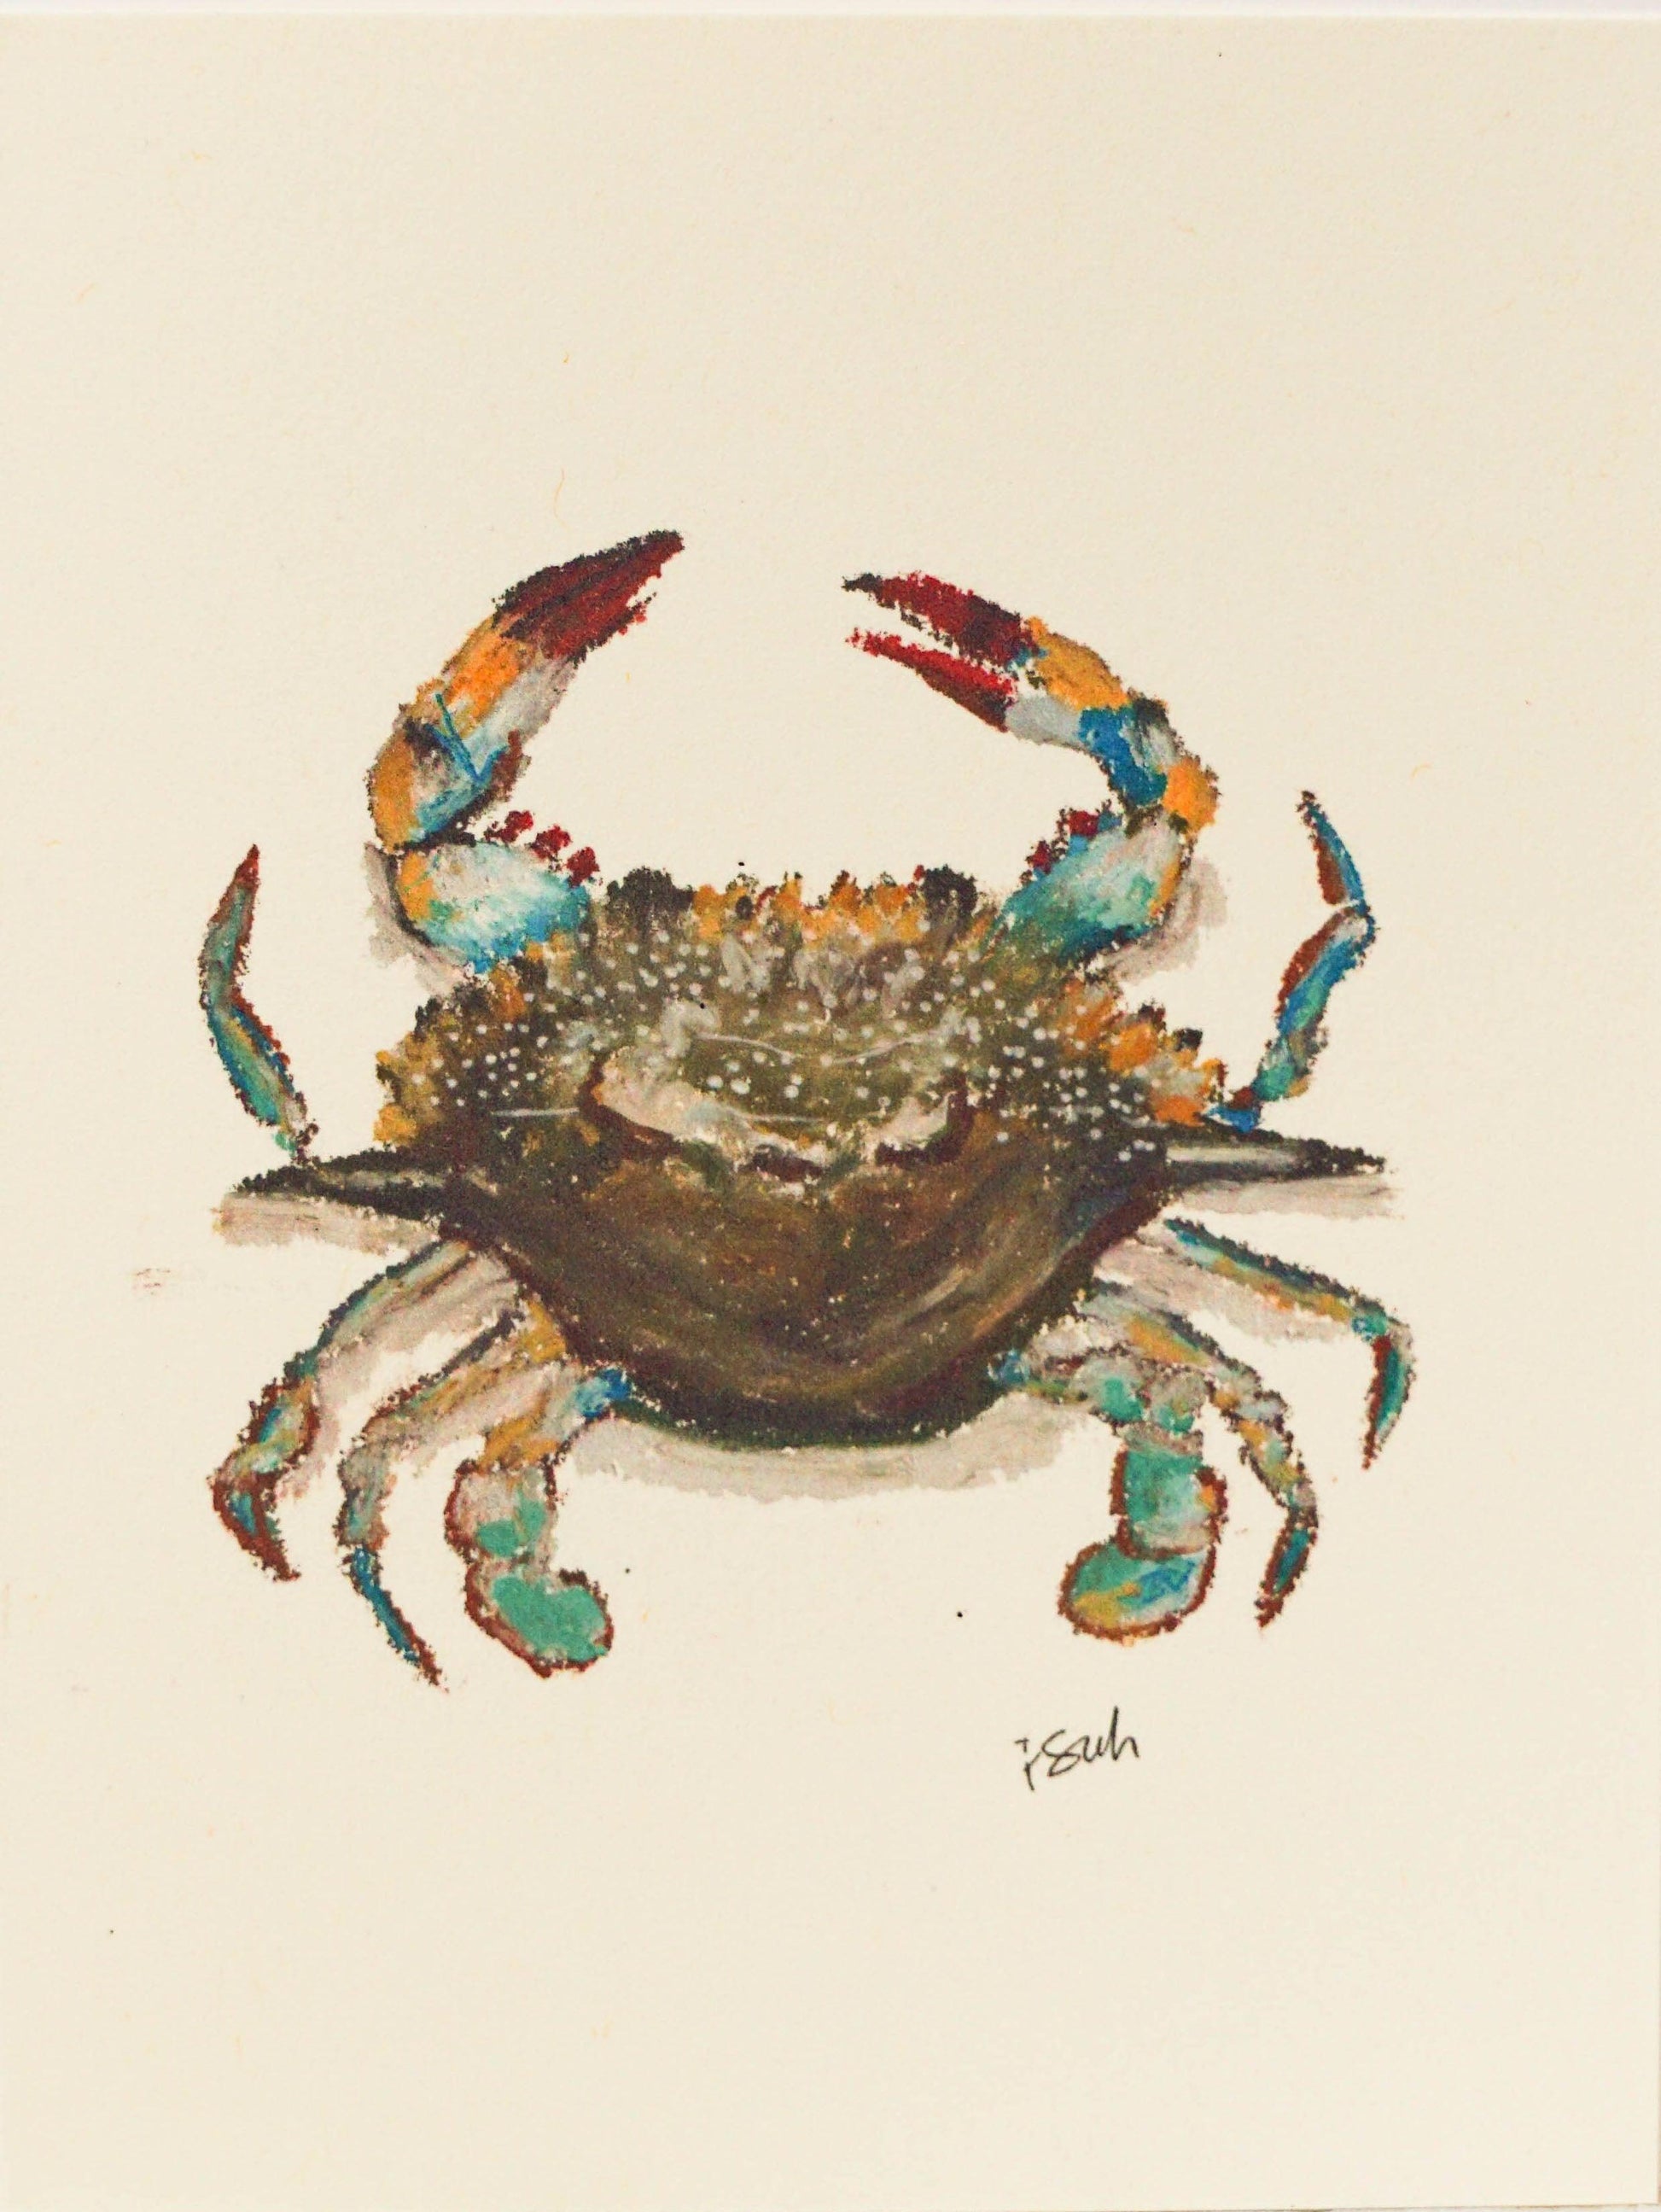 Blue Crab Print - 11x8.5 inch - Starfruit Prints